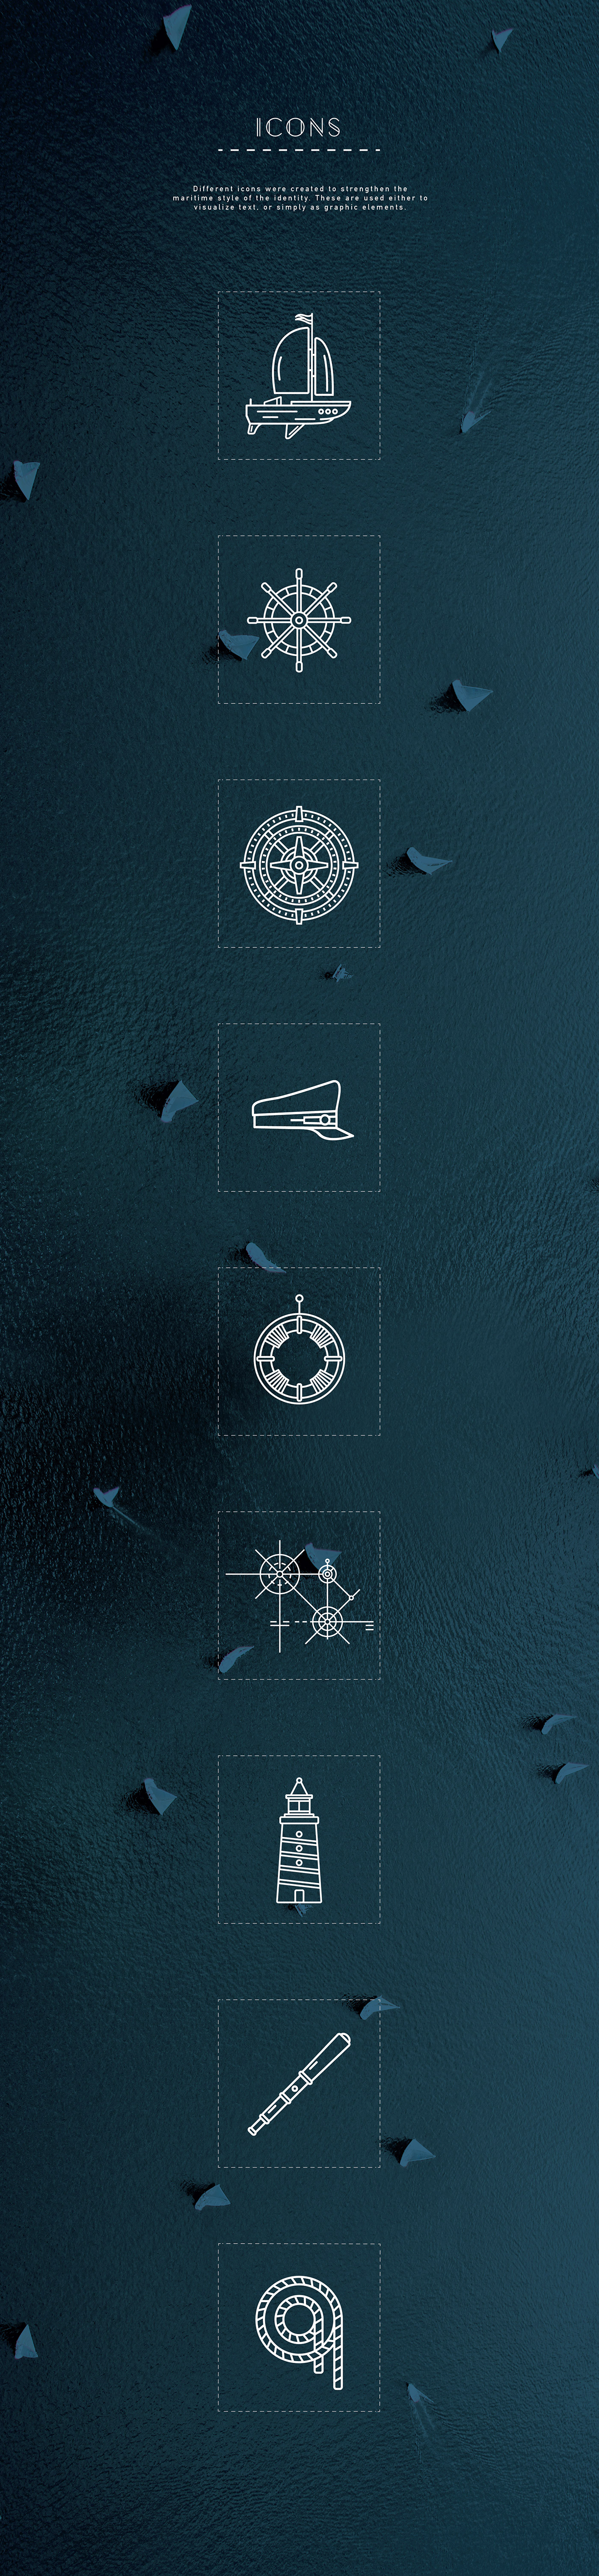 sailing race nautical icons poster brochure marine vintage minimalist boat identity profile pictogram færderseilasen norway